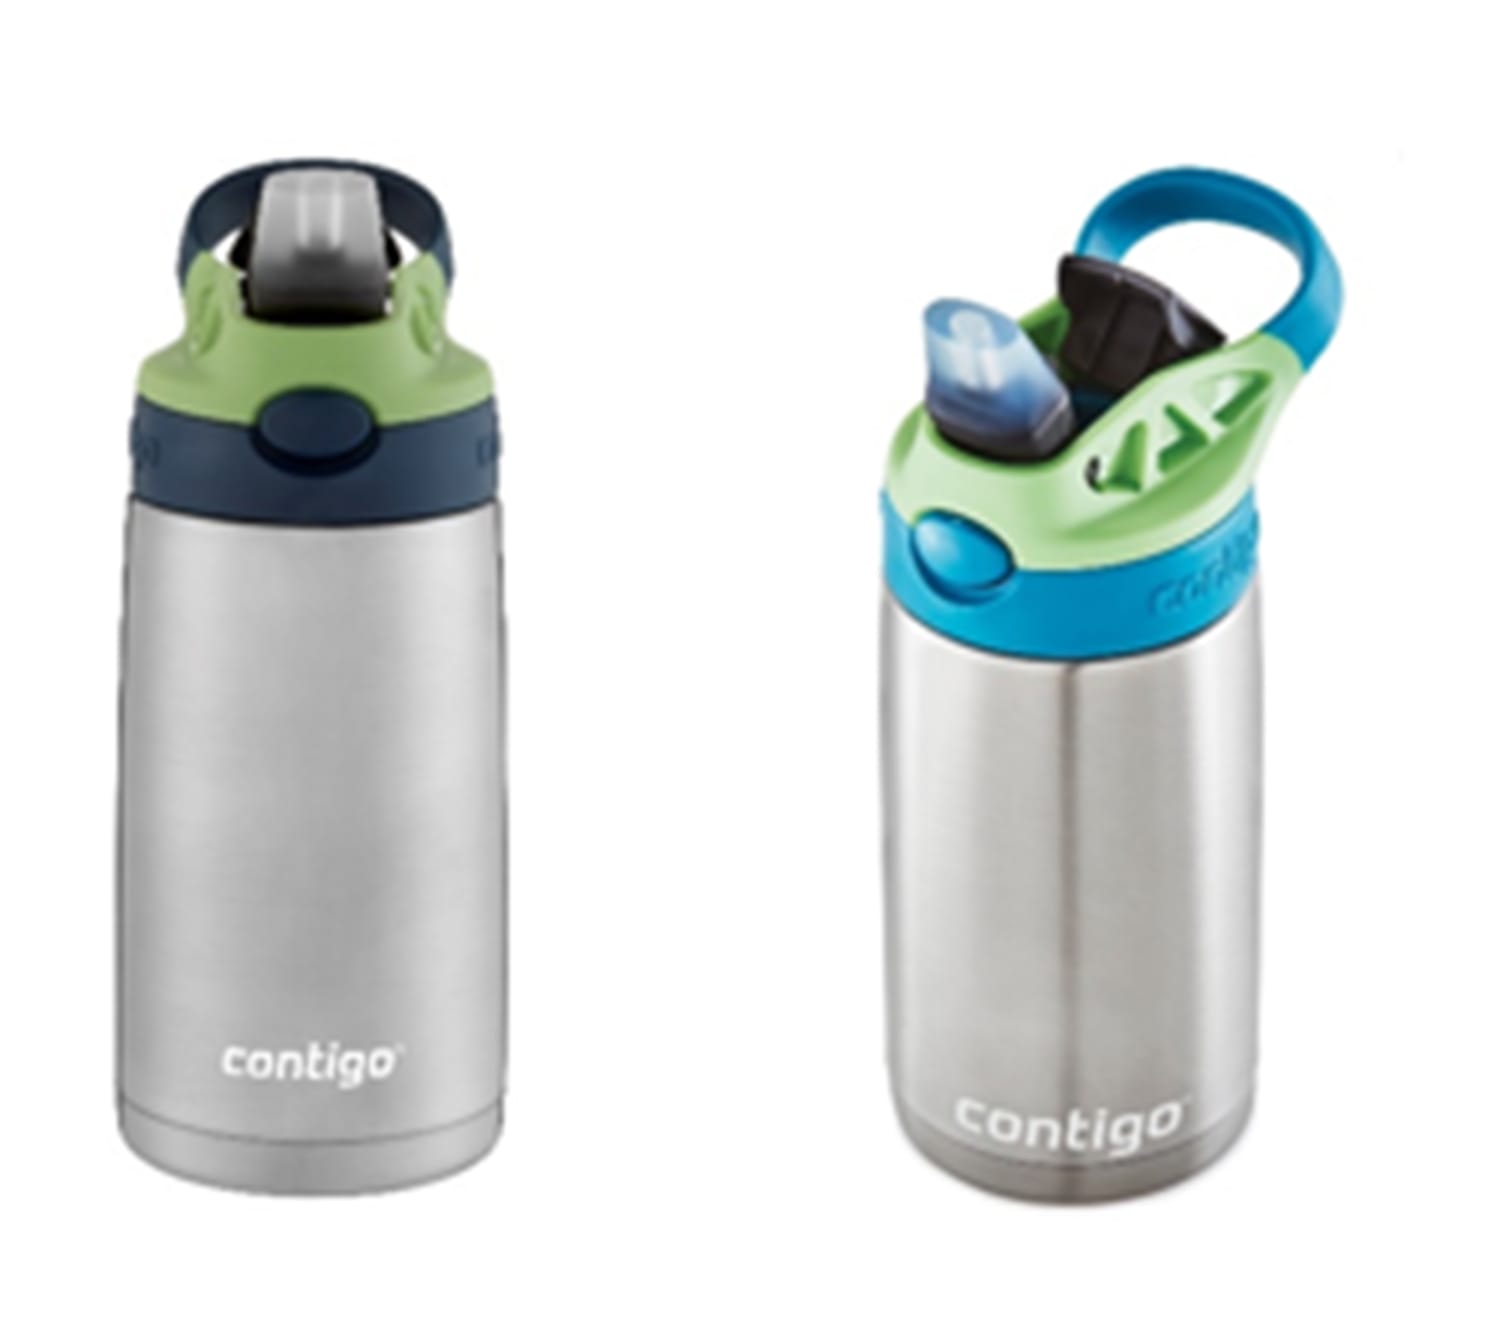 Contigo announces second recall of nearly 6 million kids water bottles